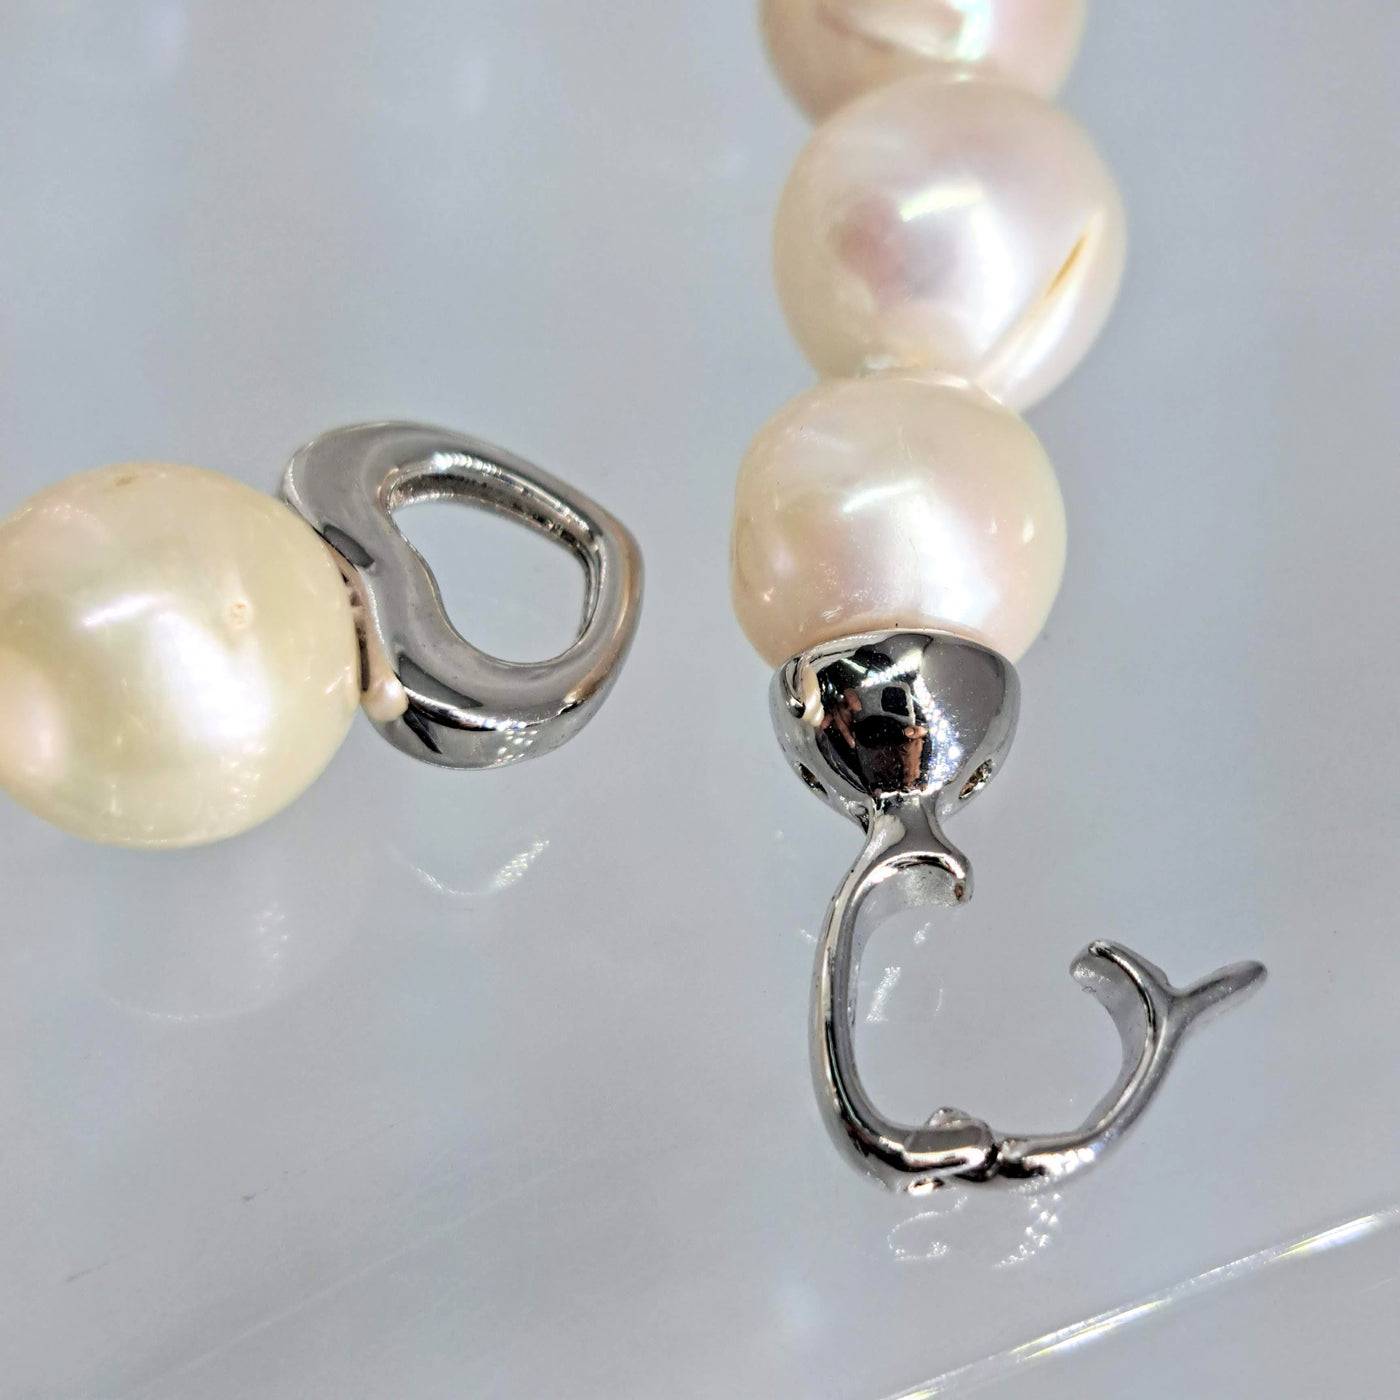 "Lovely Lady Balls" 8" Bracelet - Pearls, Sterling Silver